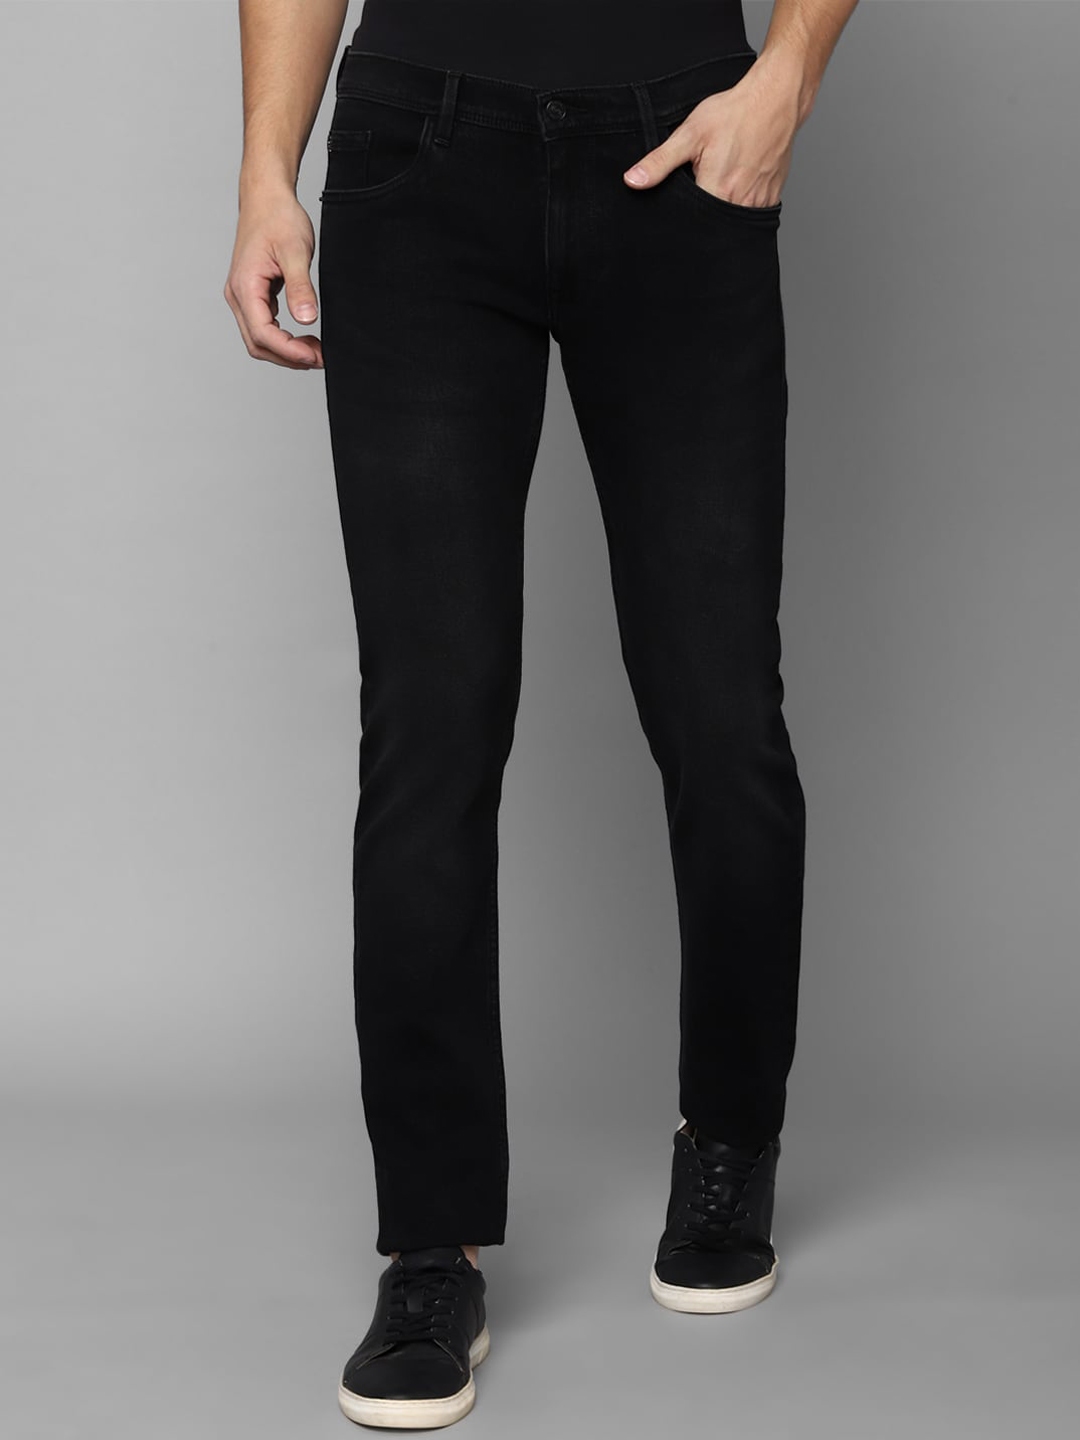 Buy Allen Solly Men Black Skinny Fit Jeans - Jeans for Men 18156202 ...